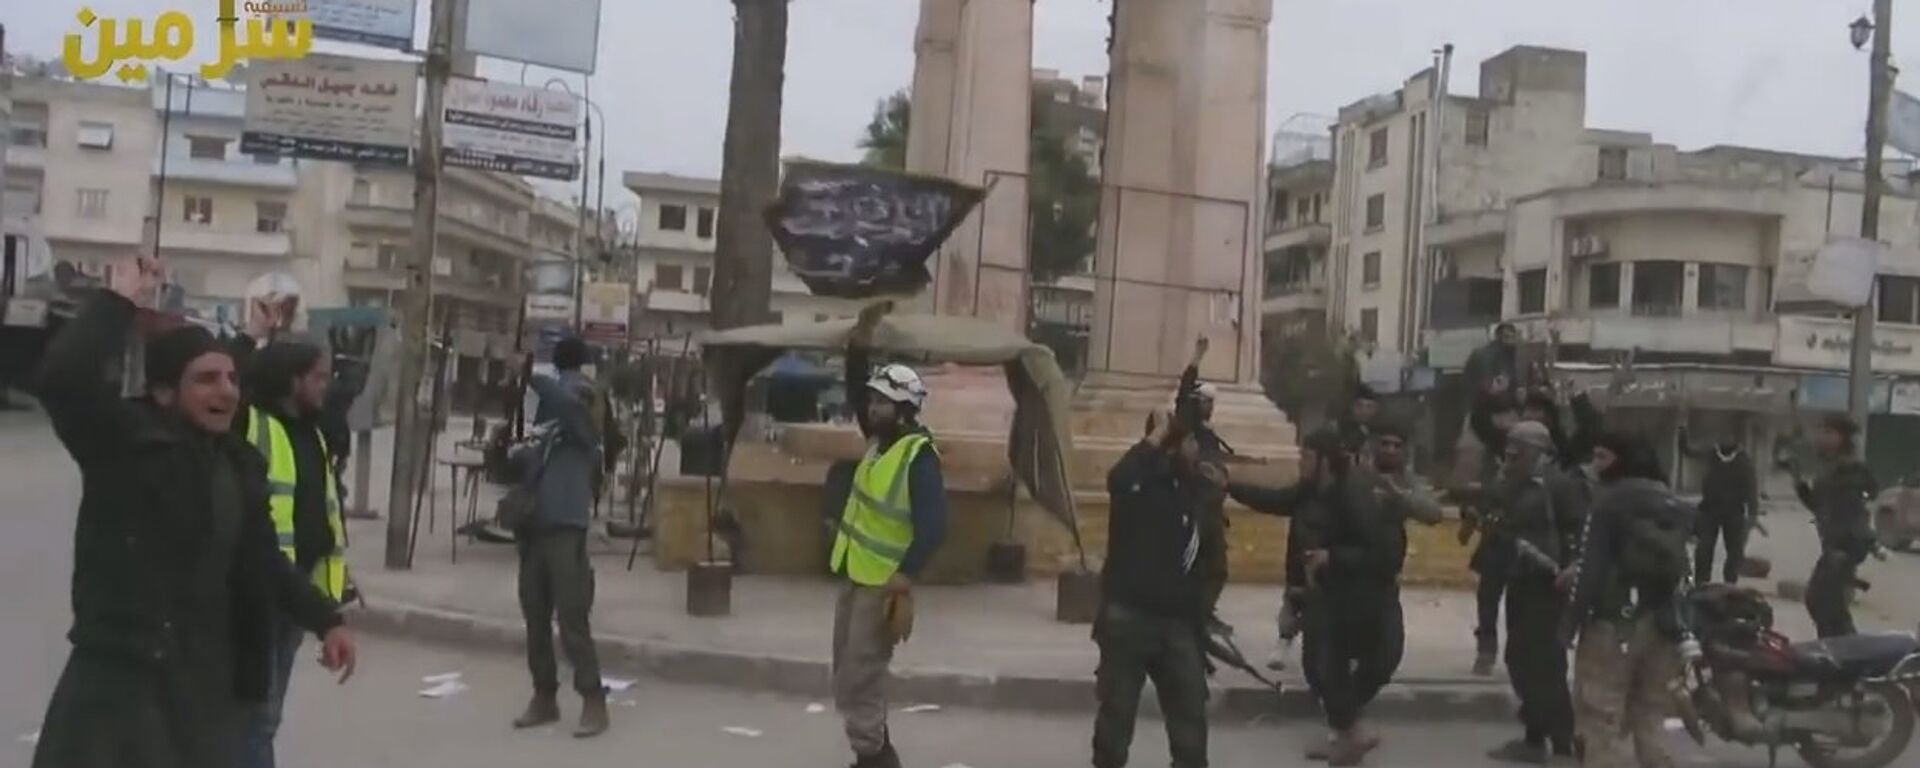 White Helmets, seen here celebrating with Nusra extremists - Sputnik International, 1920, 18.03.2017